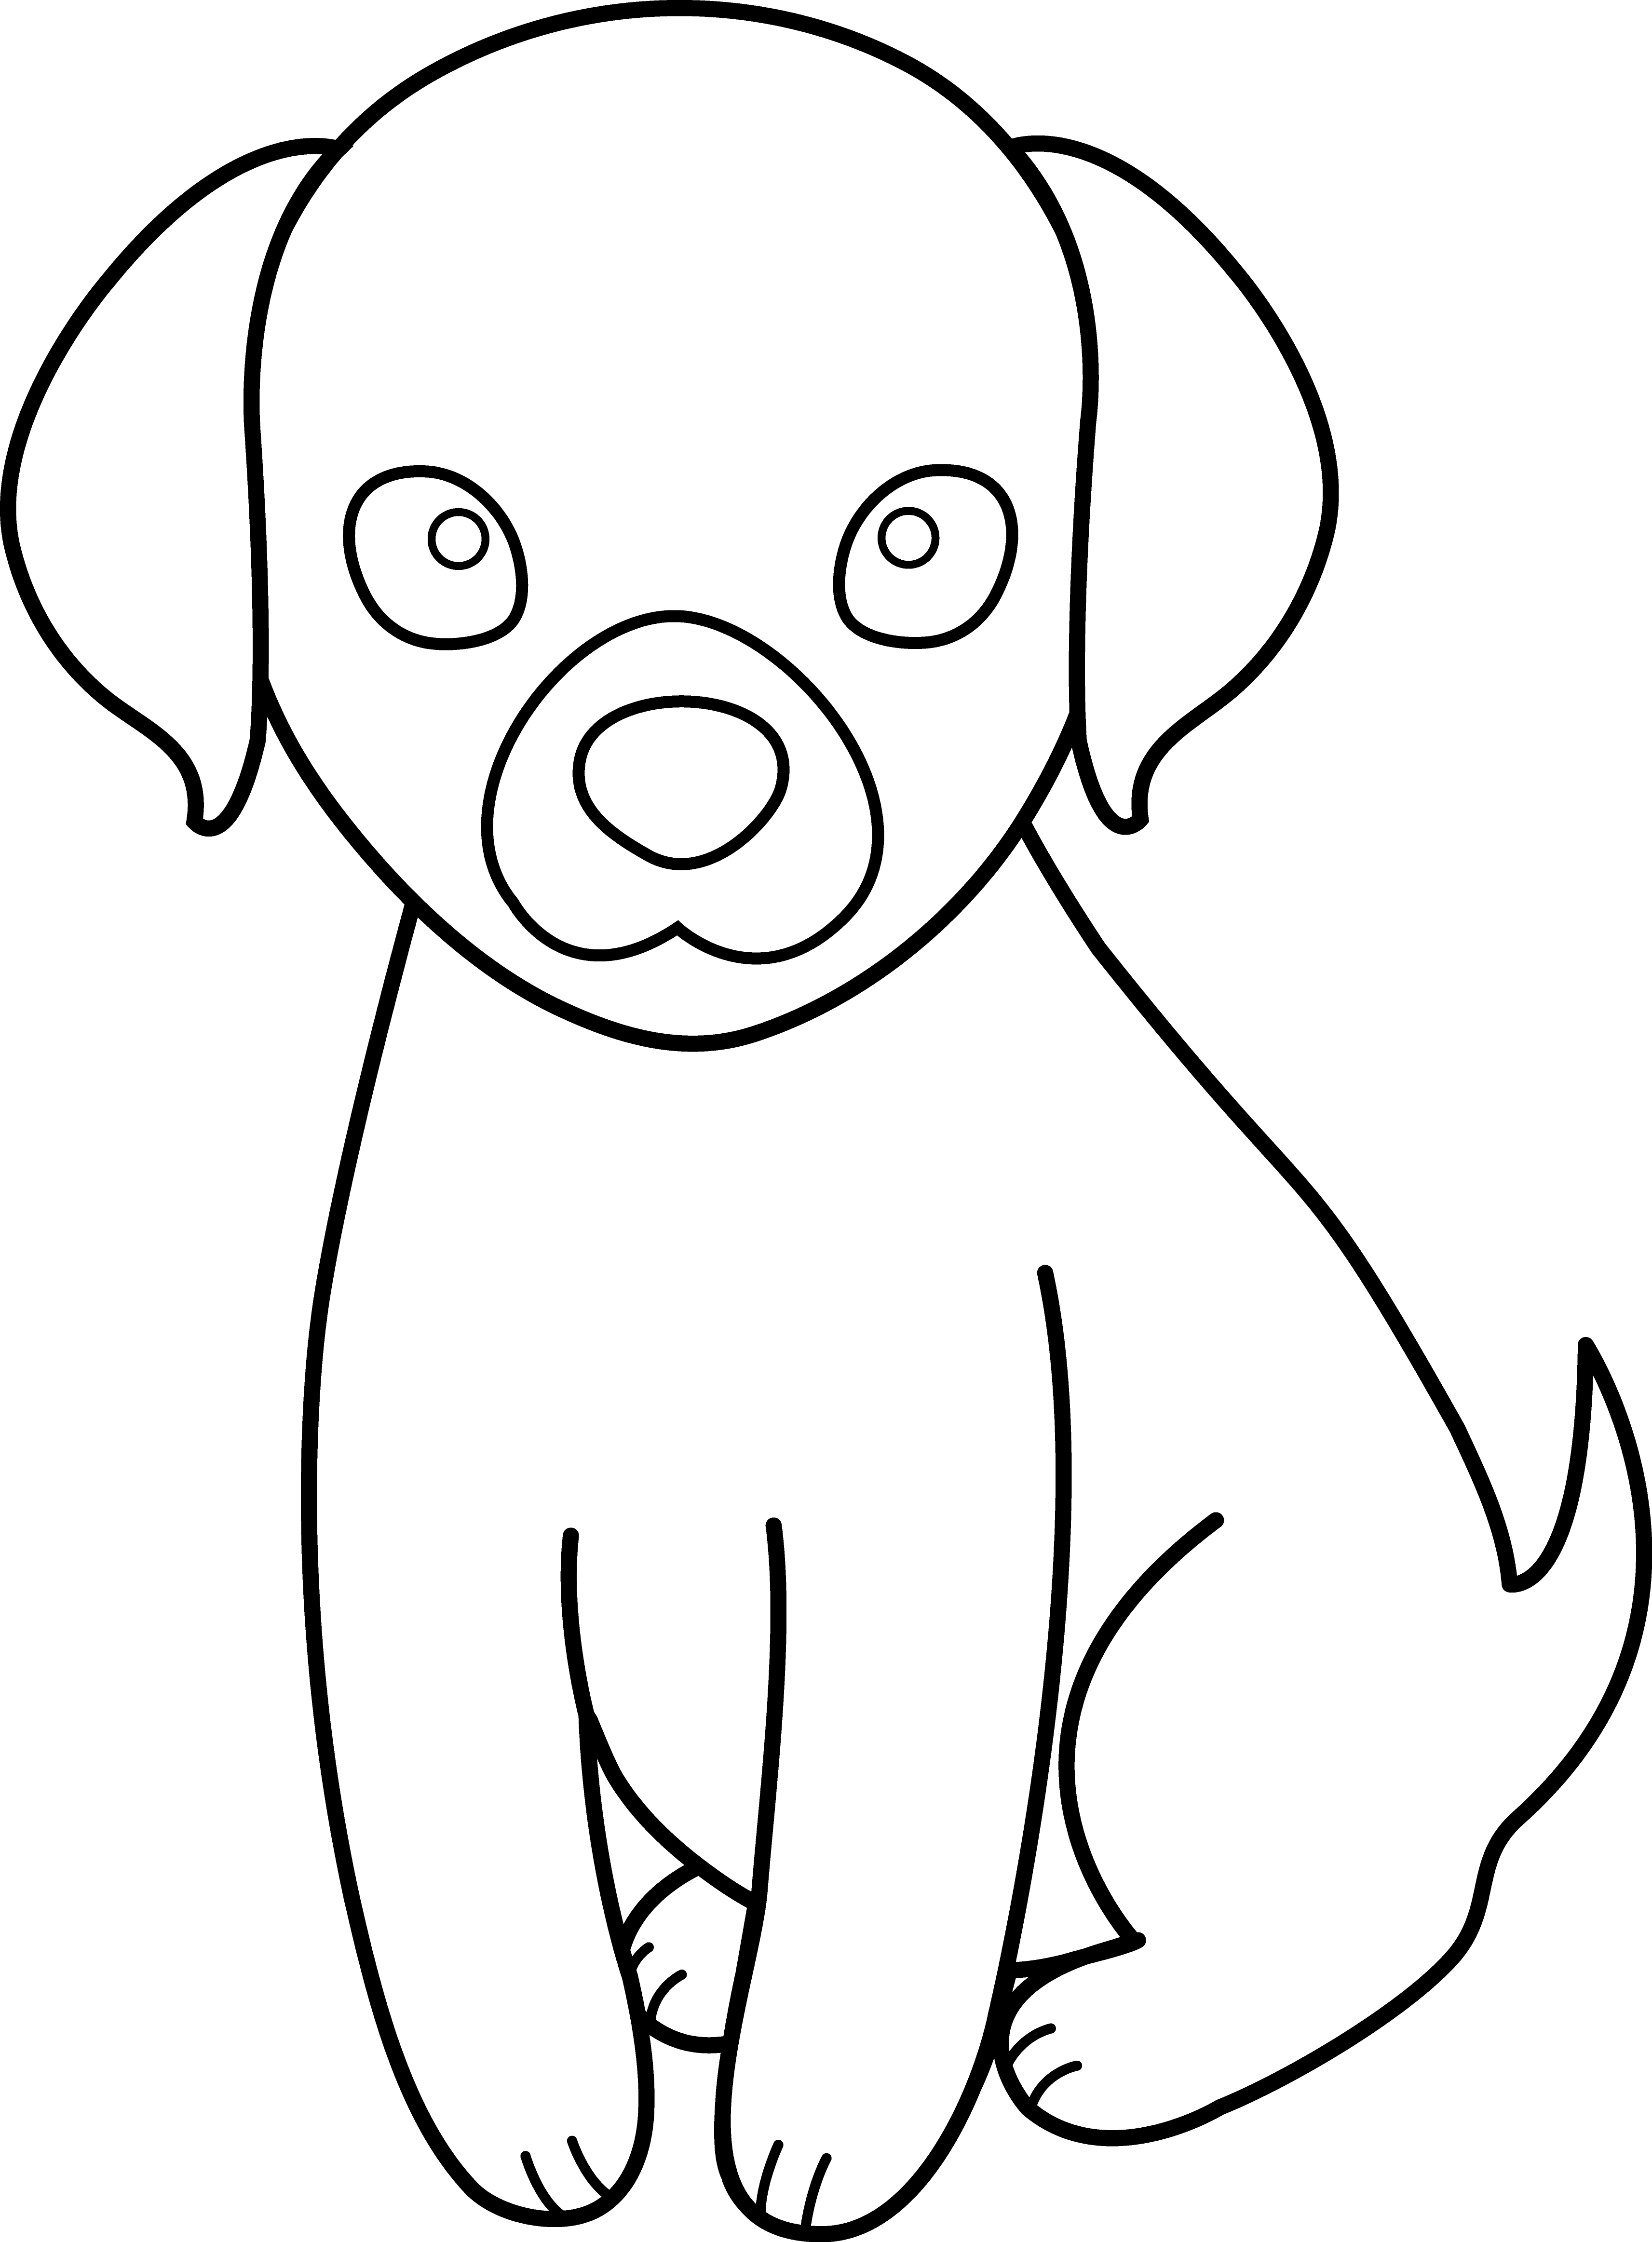 free-dog-line-art-download-free-dog-line-art-png-images-free-cliparts